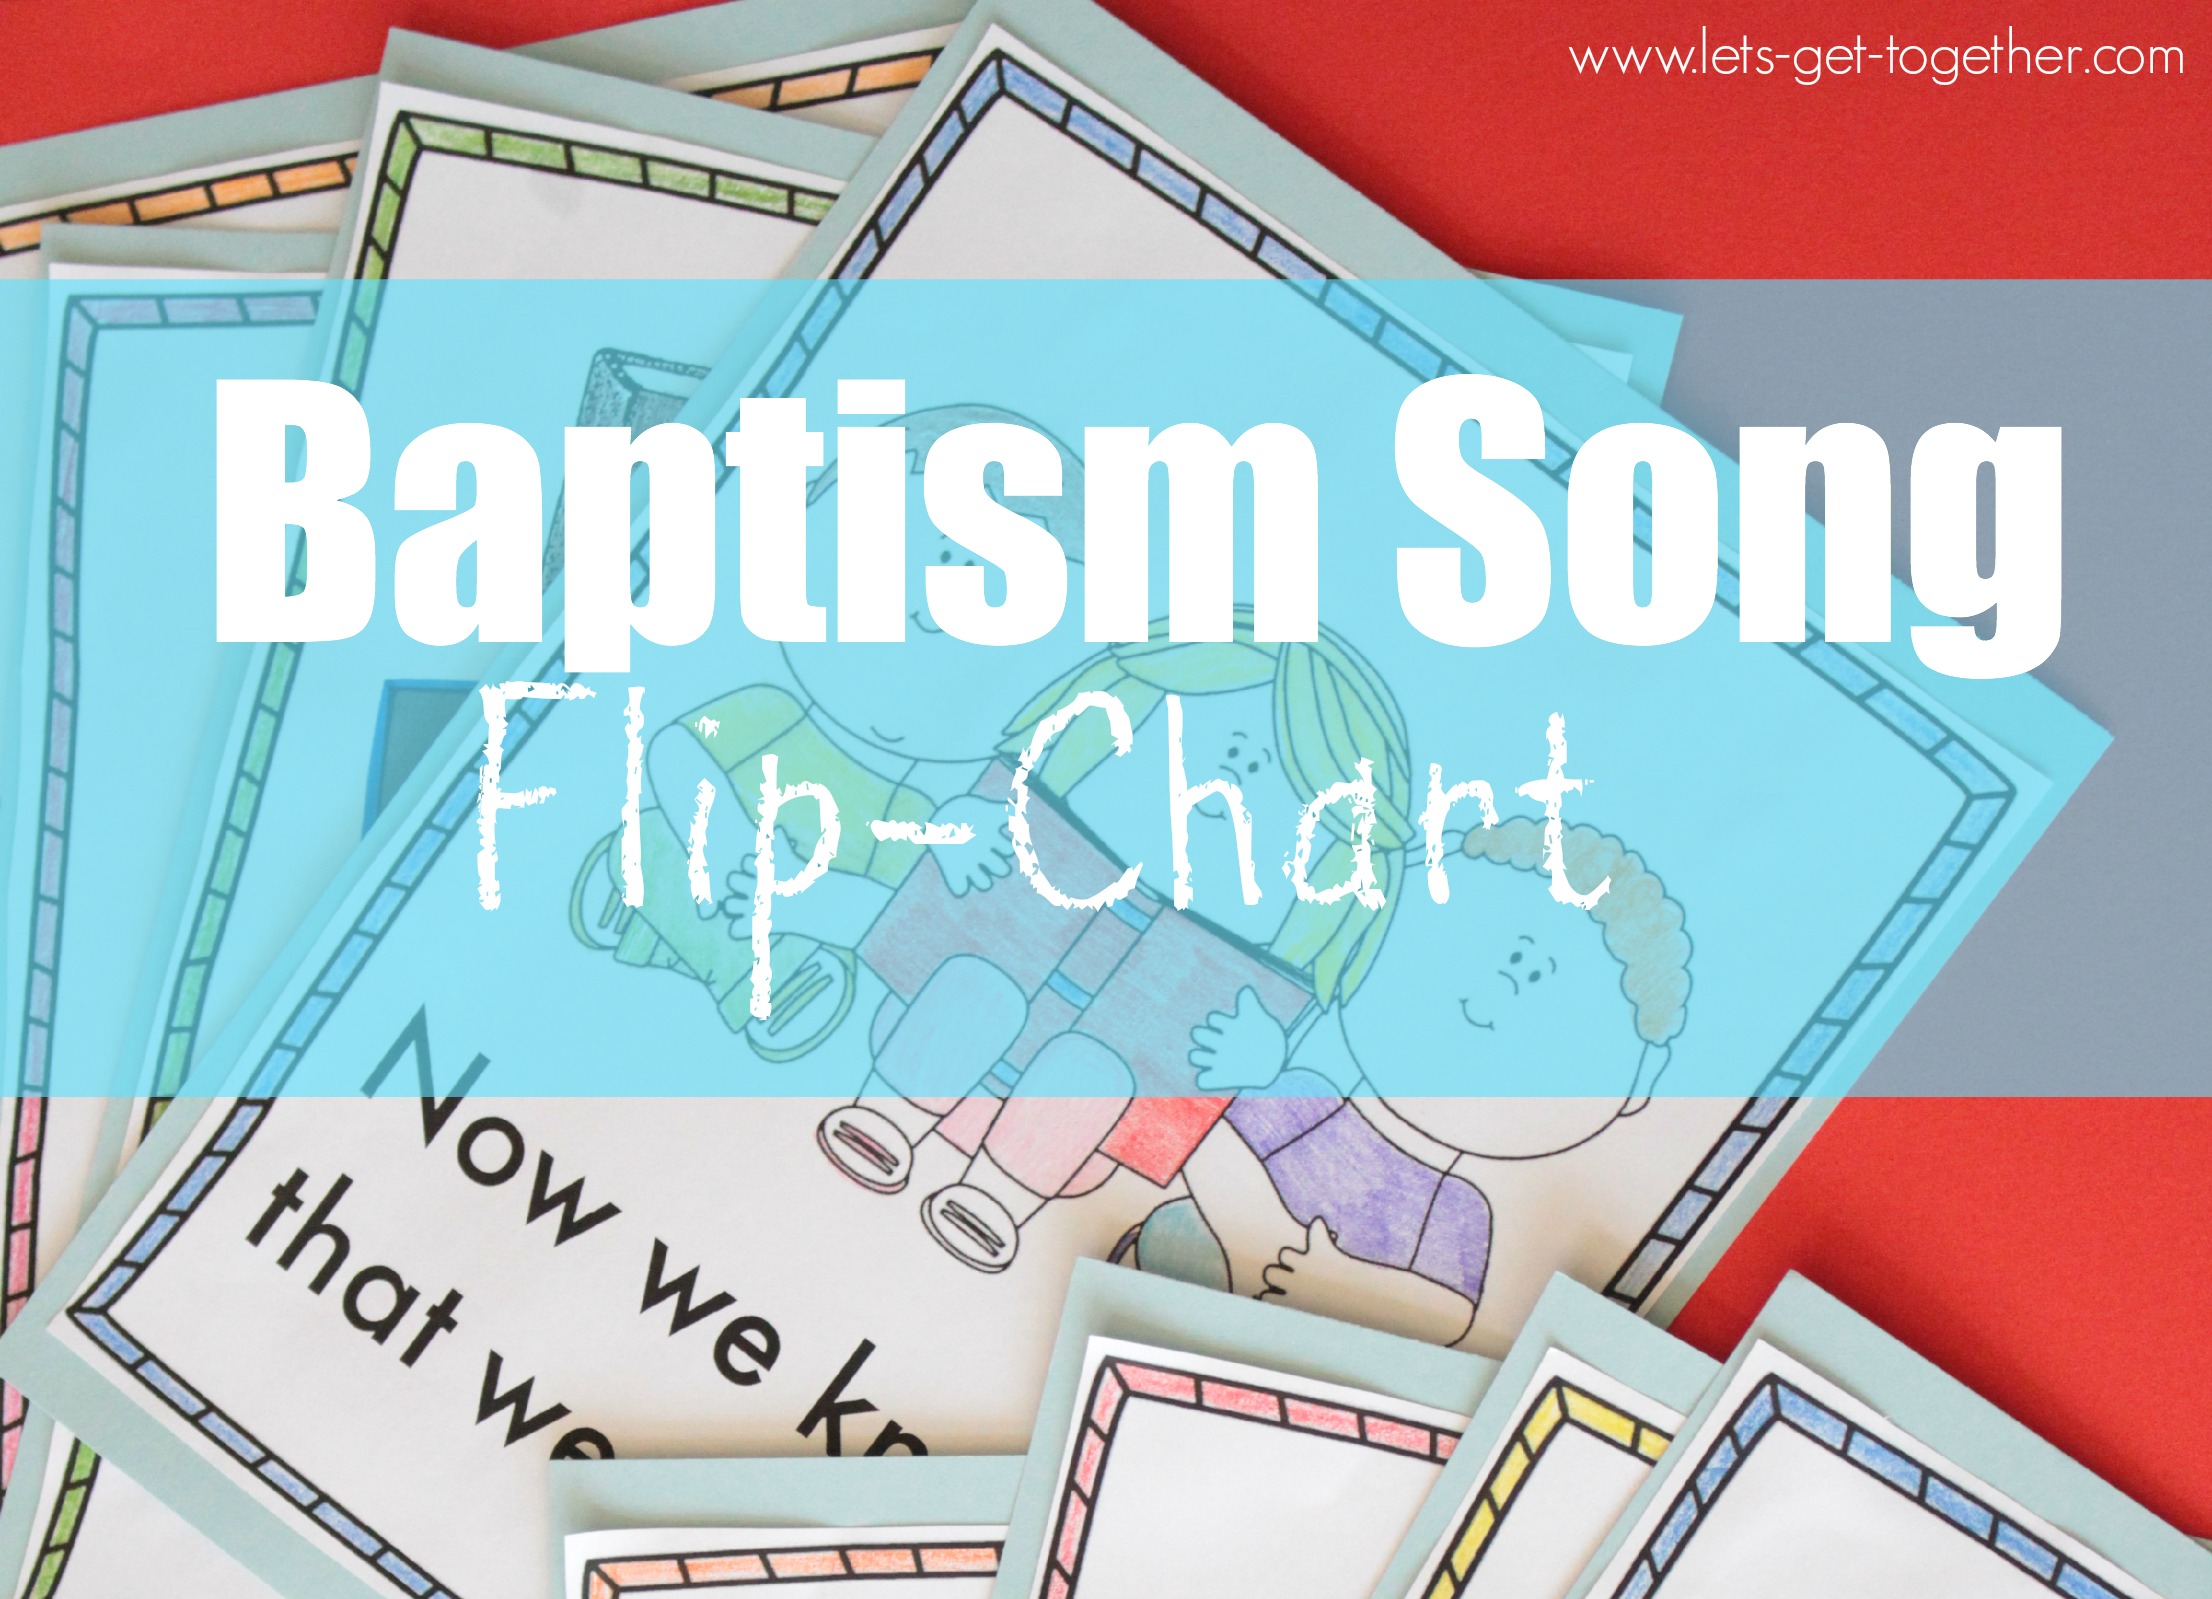 Sleep Little Jesus Flip Chart & Lyrics - Primary Singing